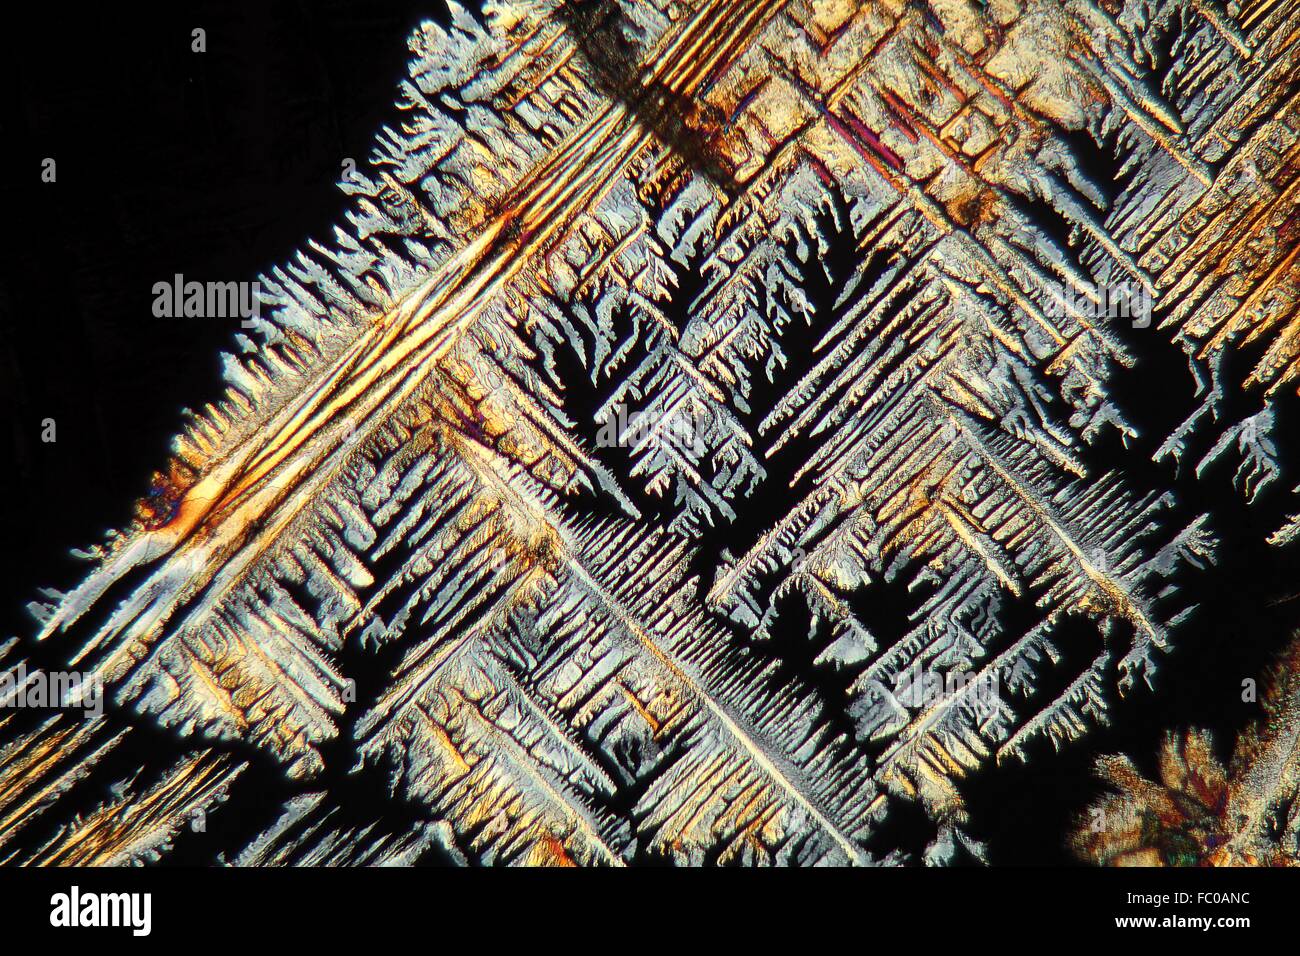 Crystals of Paracetamol under the microscope. Stock Photo